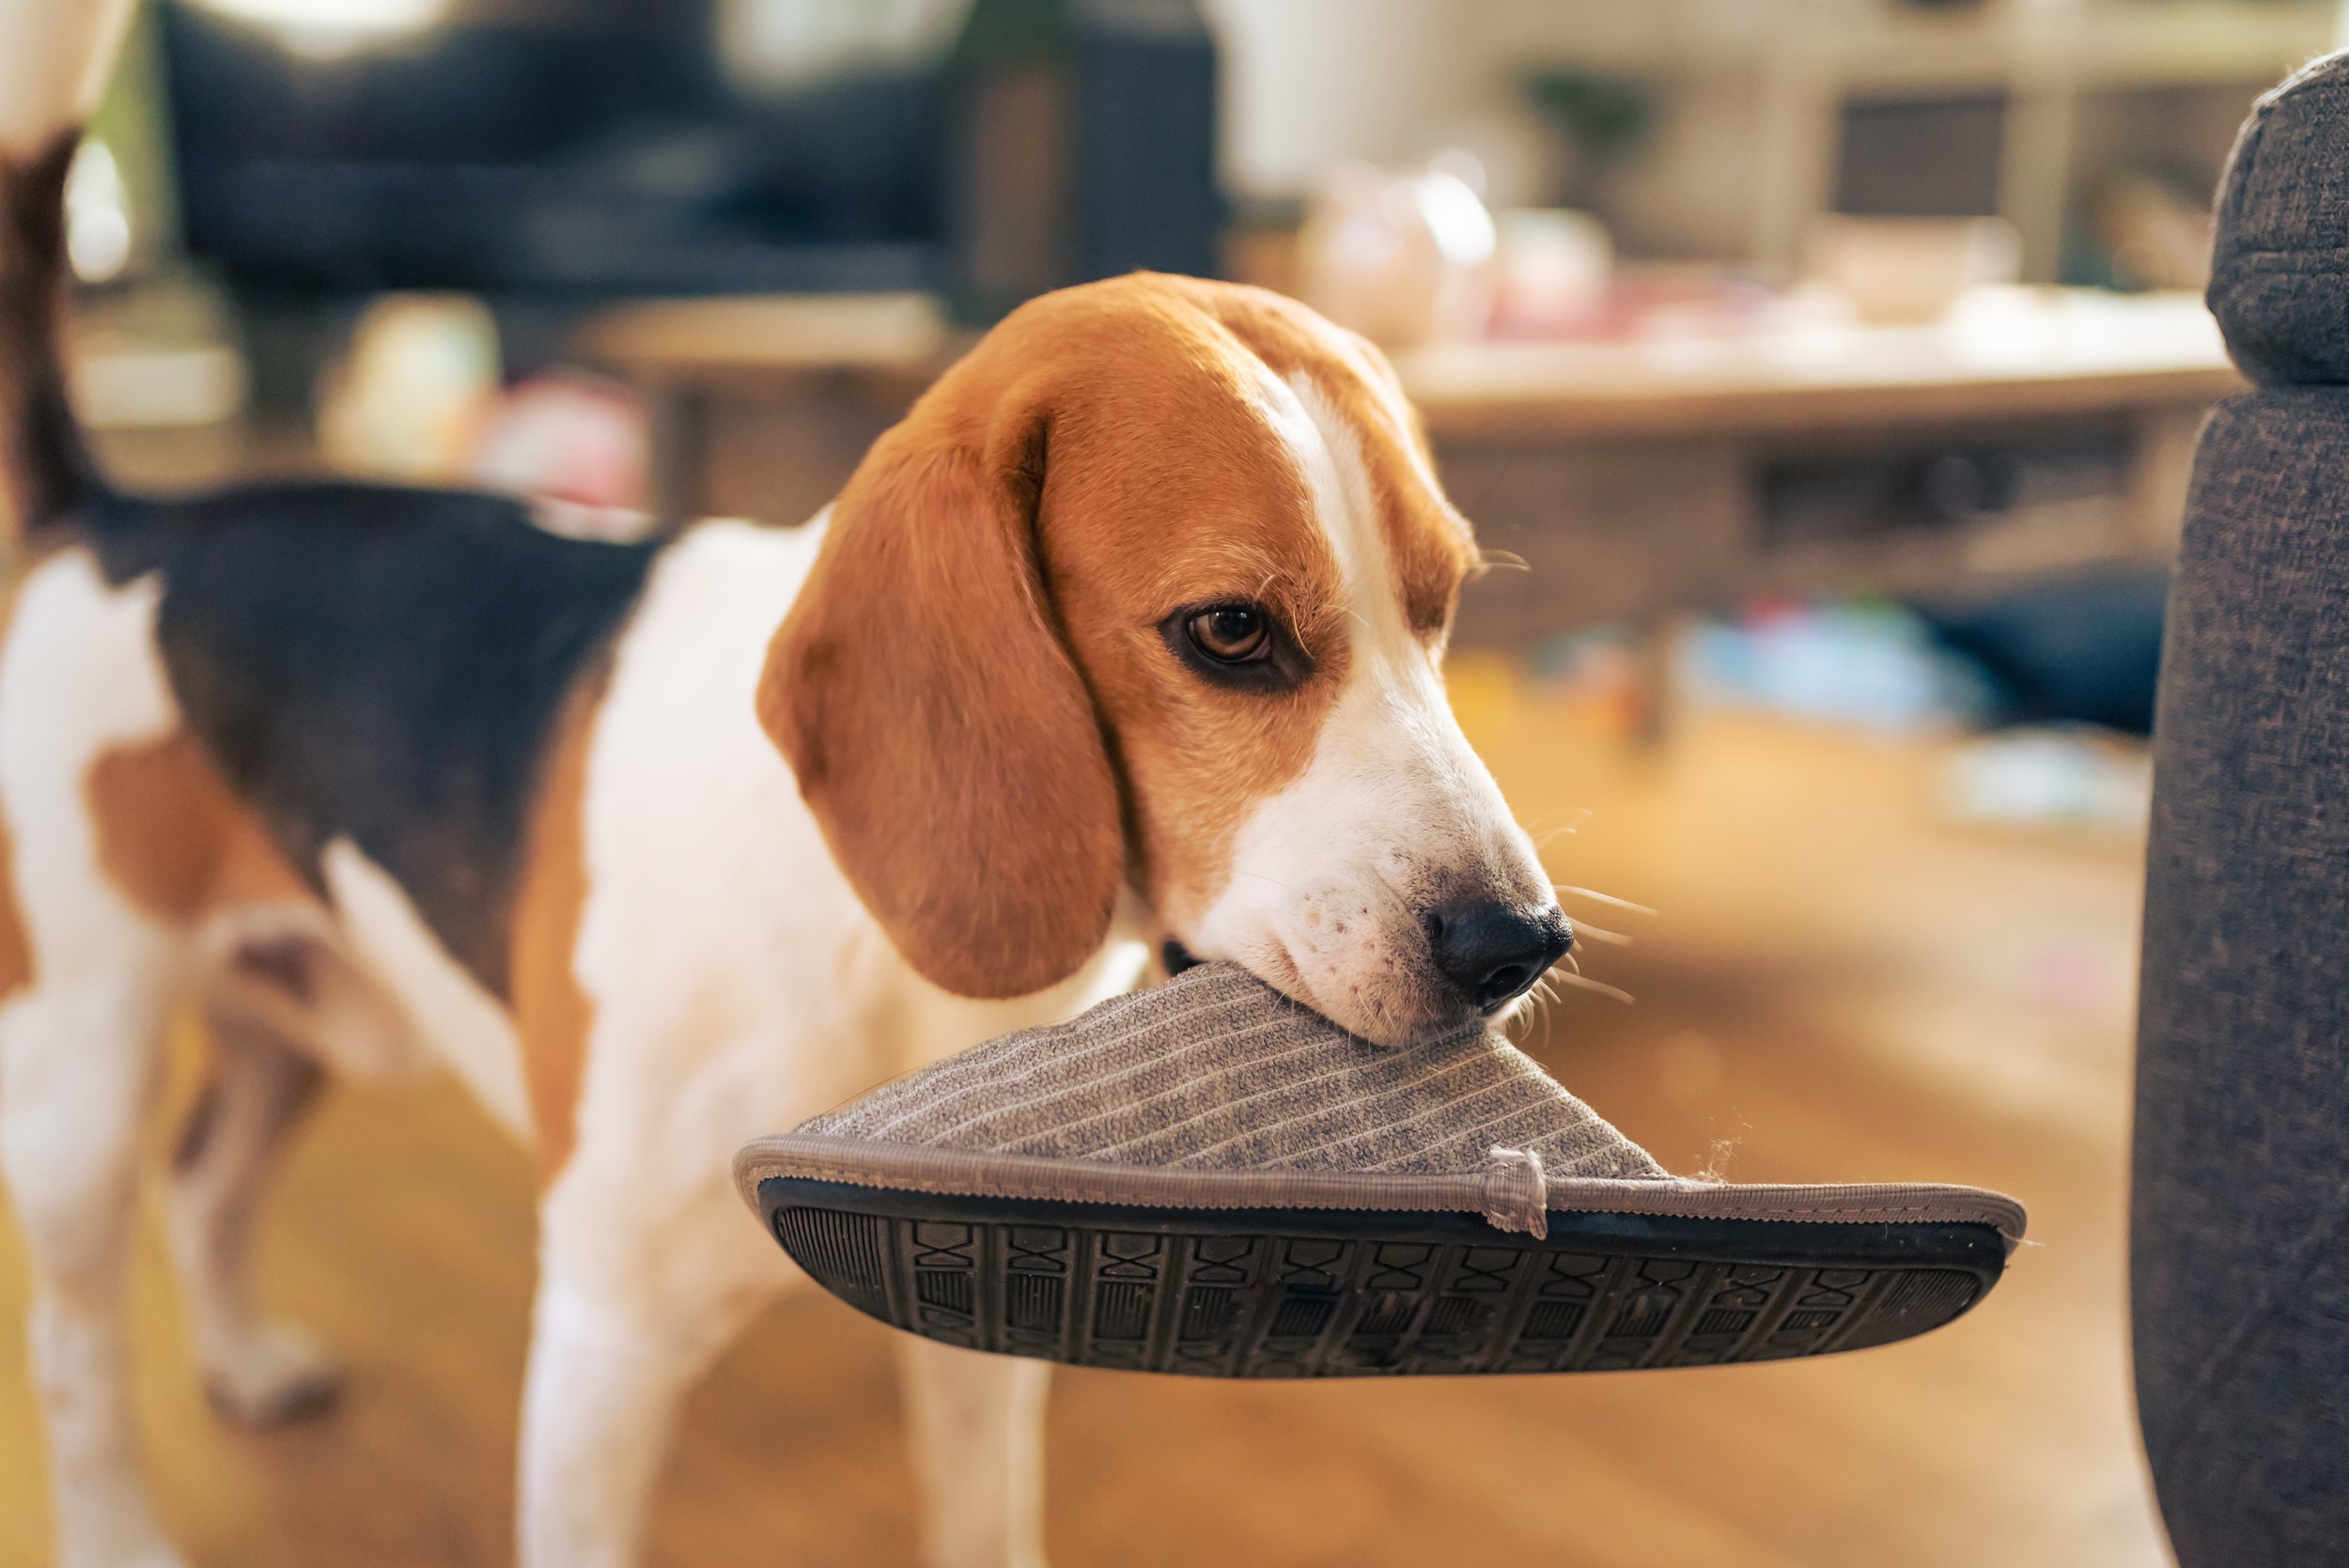 Beagle dog with slipper_iStock-1286002255.jpeg